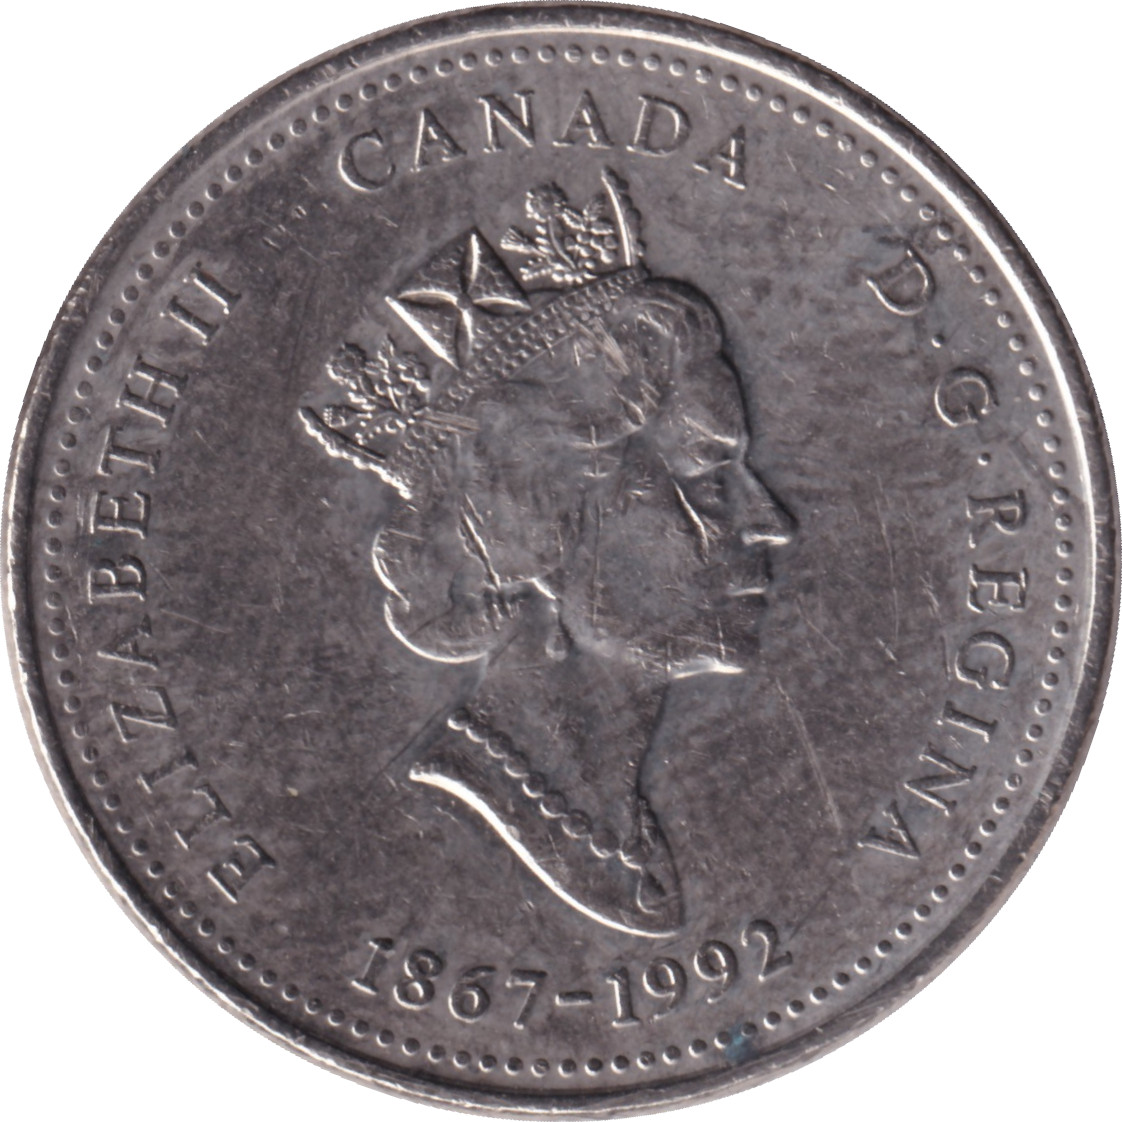 25 cents - Ontario